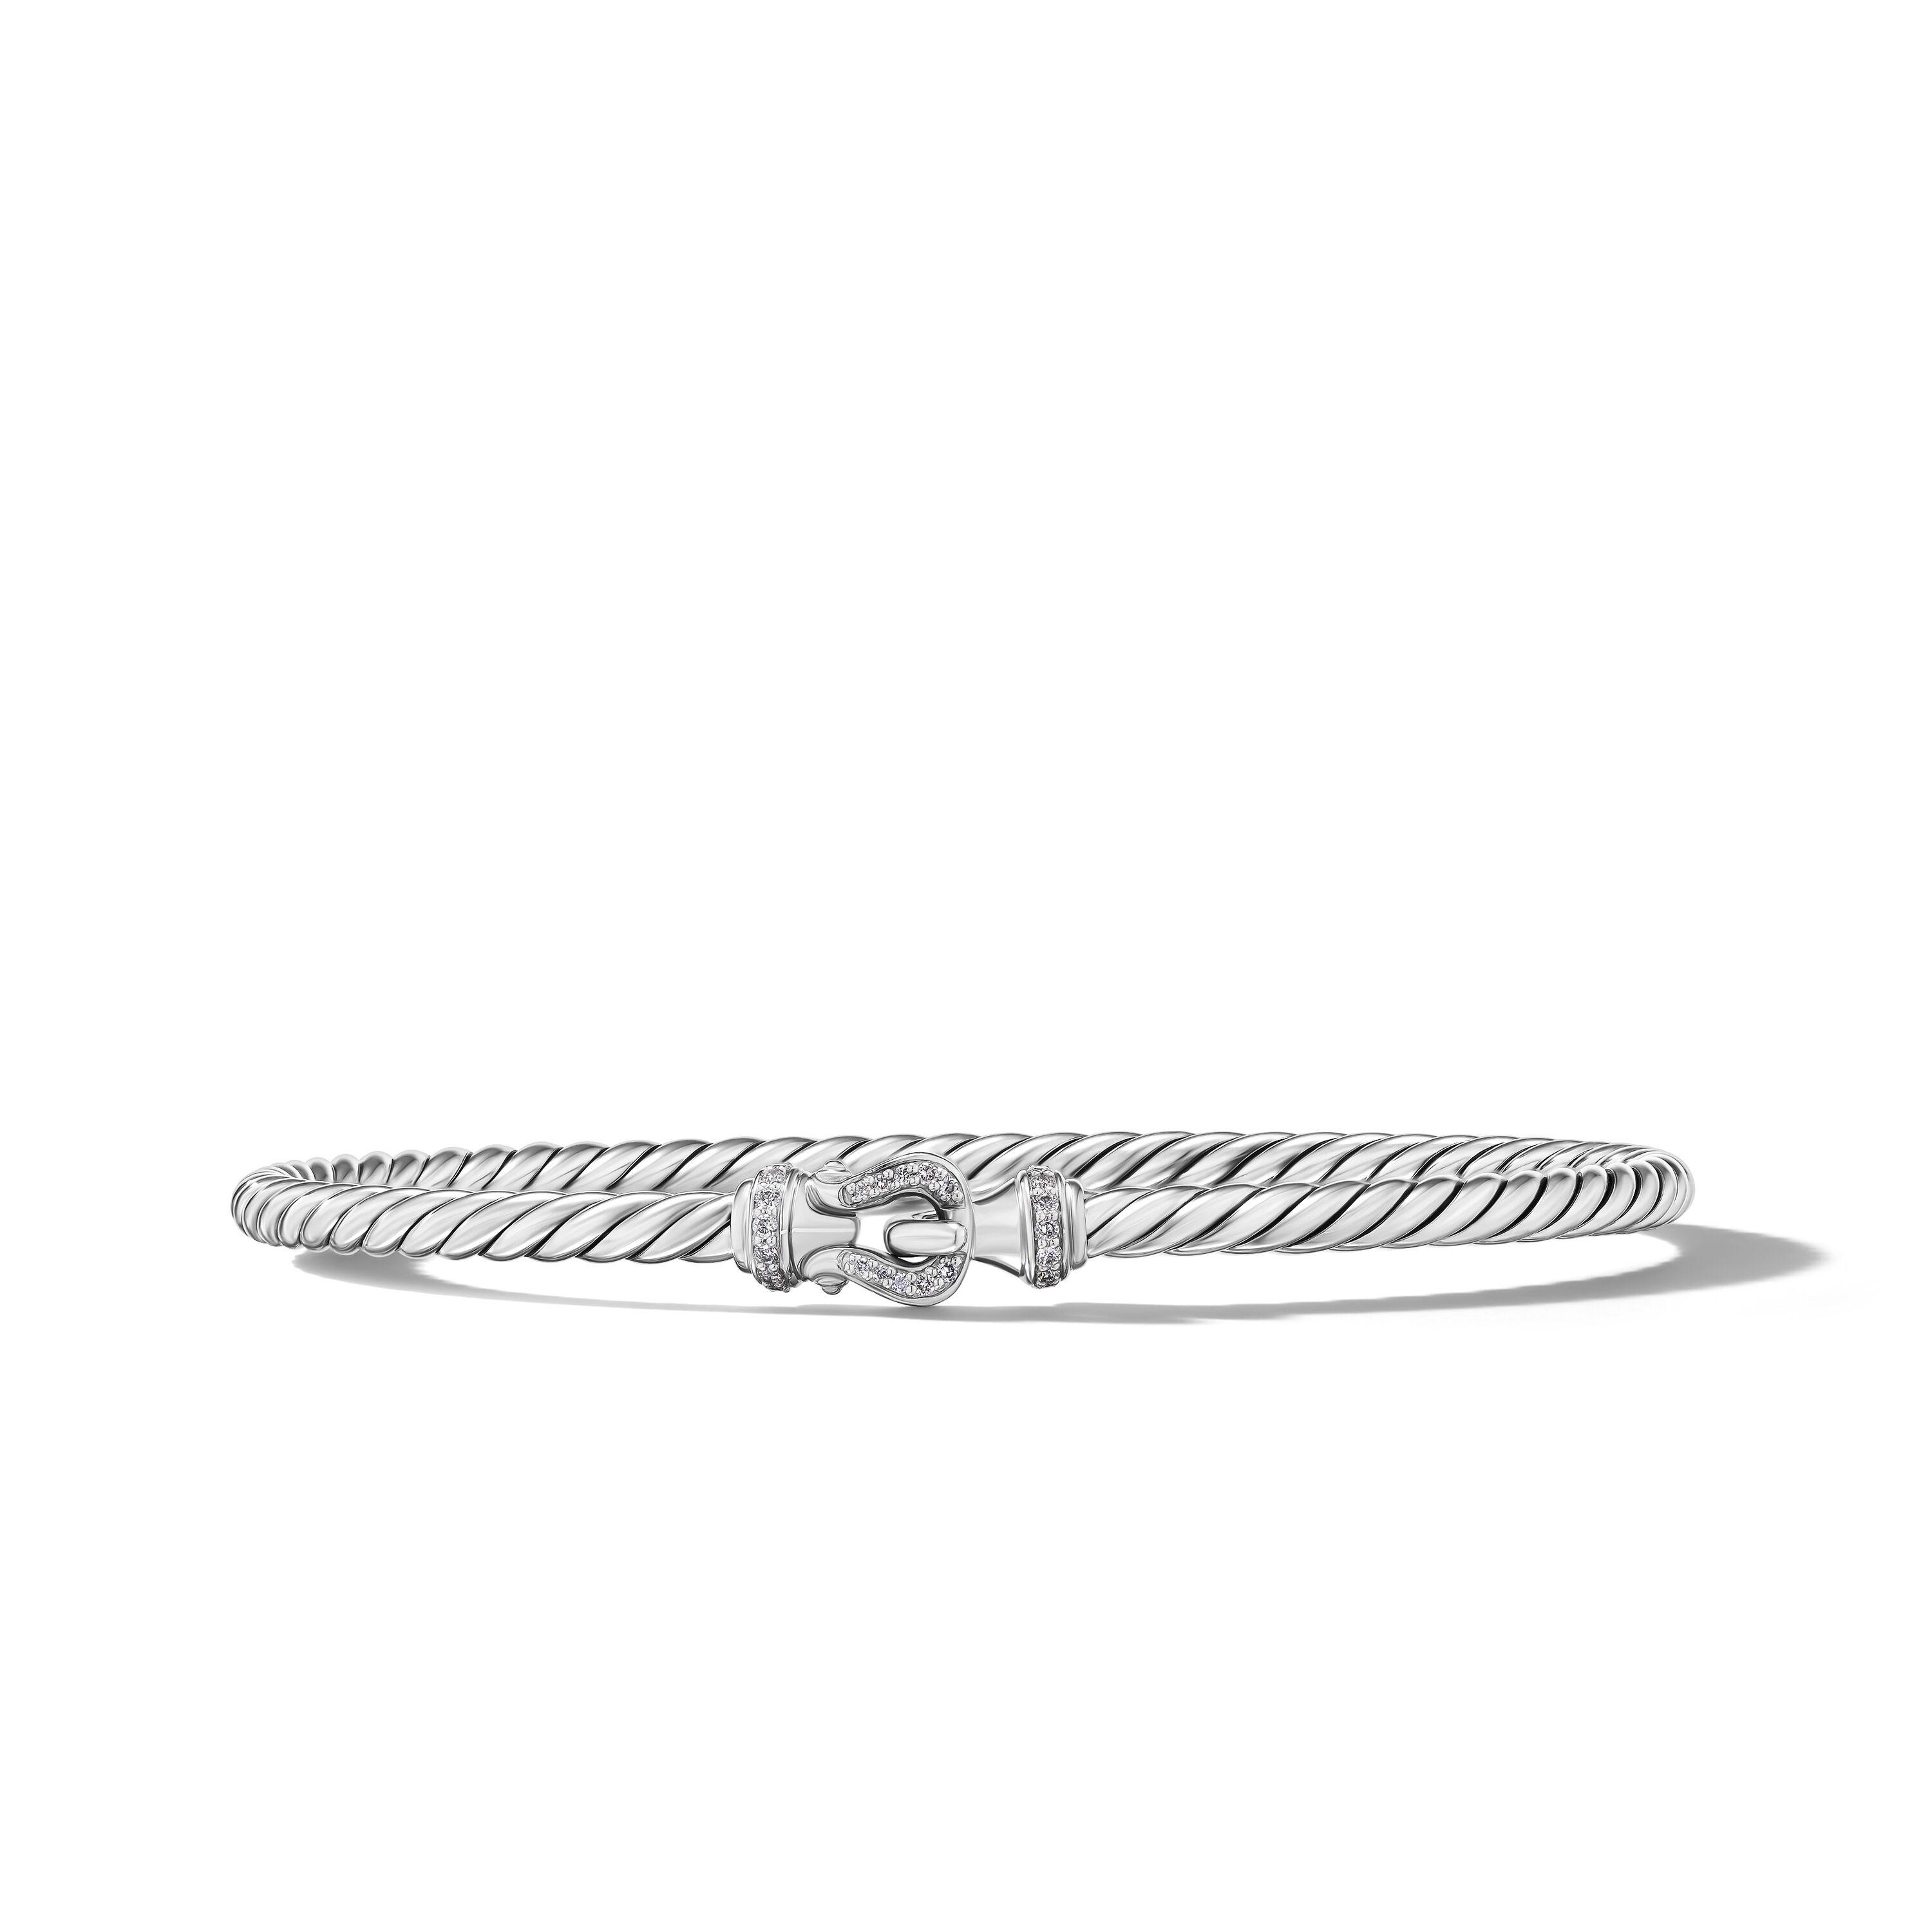 David Yurman 3mm Buckle Bracelet in Sterling Silver with Diamonds, Size Medium